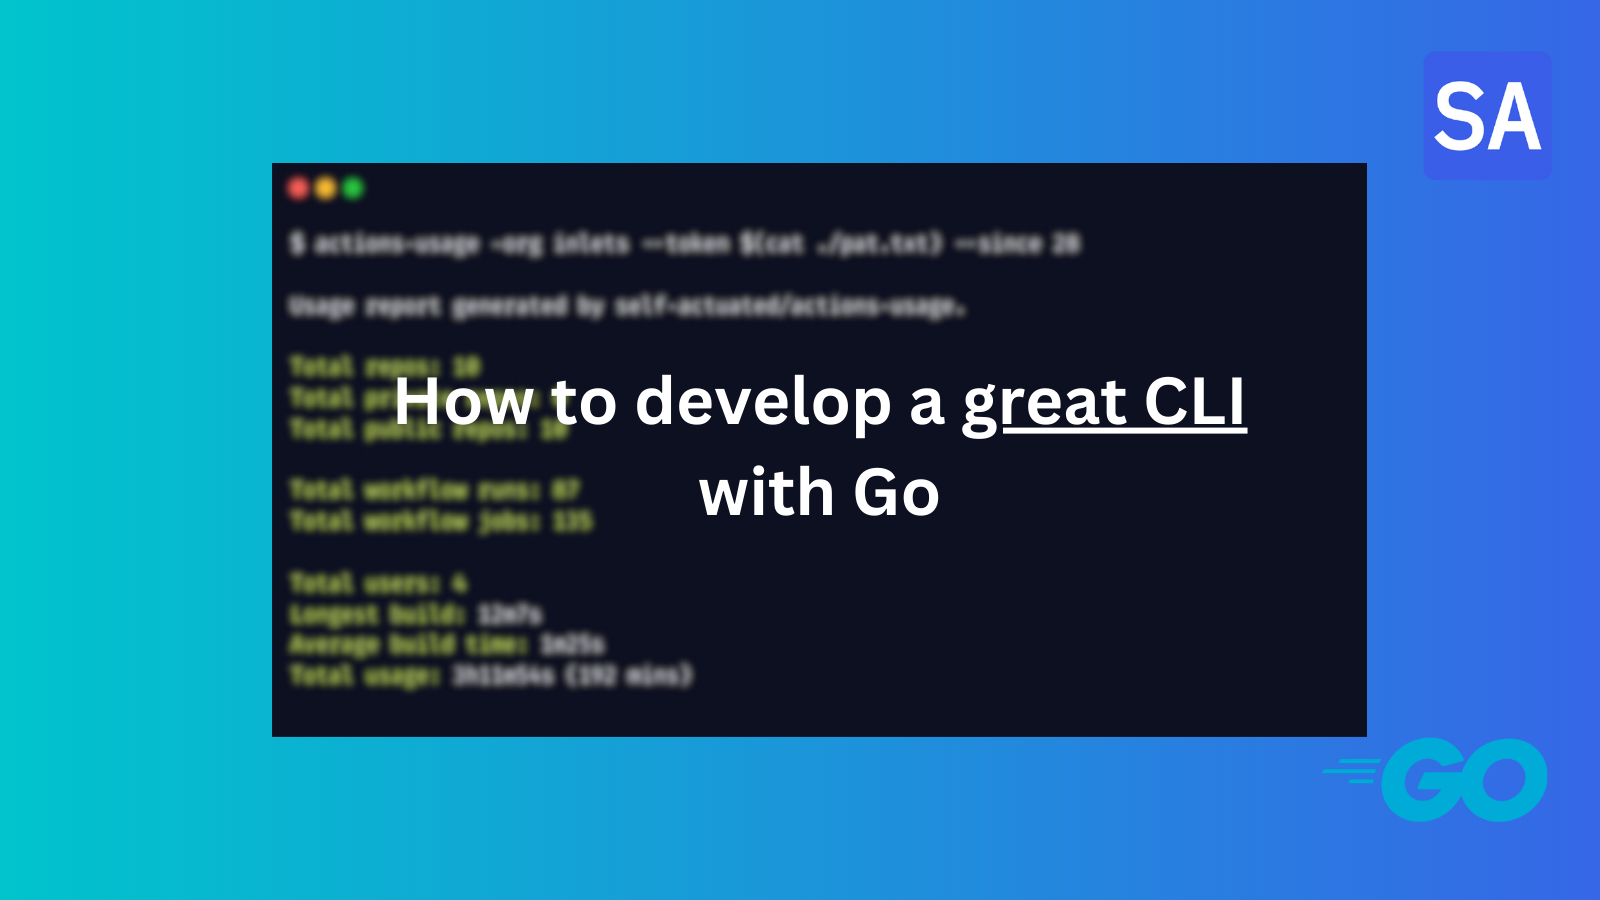 GitHub - charmbracelet/gum: A tool for glamorous shell scripts 🎀